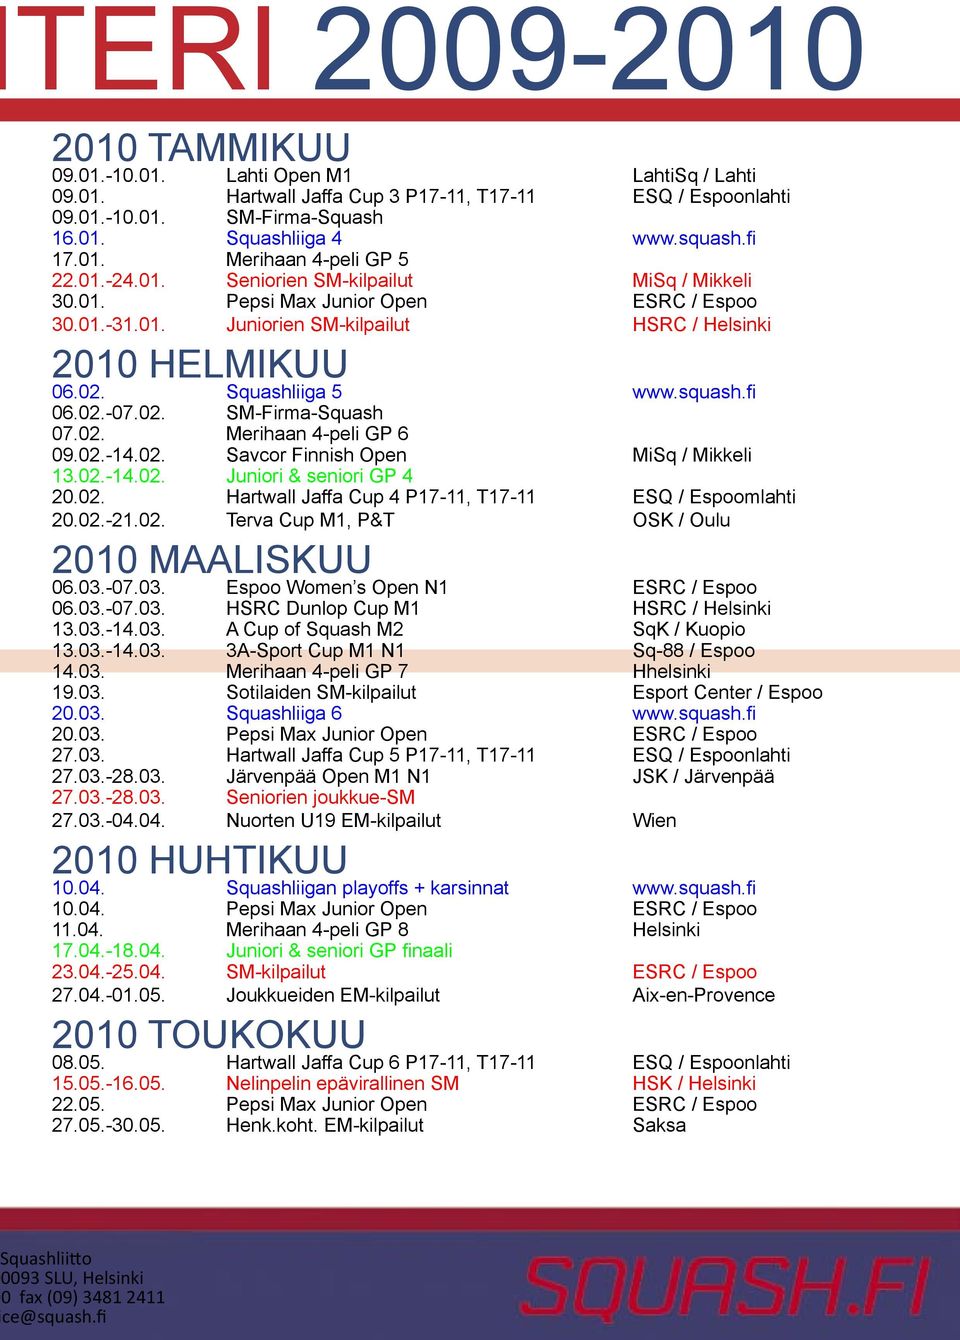 Squashliiga 5 www.squash.fi 06.02.-07.02. SM-Firma-Squash 07.02. Merihaan 4-peli GP 6 09.02.-14.02. Savcor Finnish Open MiSq / Mikkeli 13.02.-14.02. Juniori & seniori GP 4 20.02. Hartwall Jaffa Cup 4 P17-11, T17-11 ESQ / Espoomlahti 20.